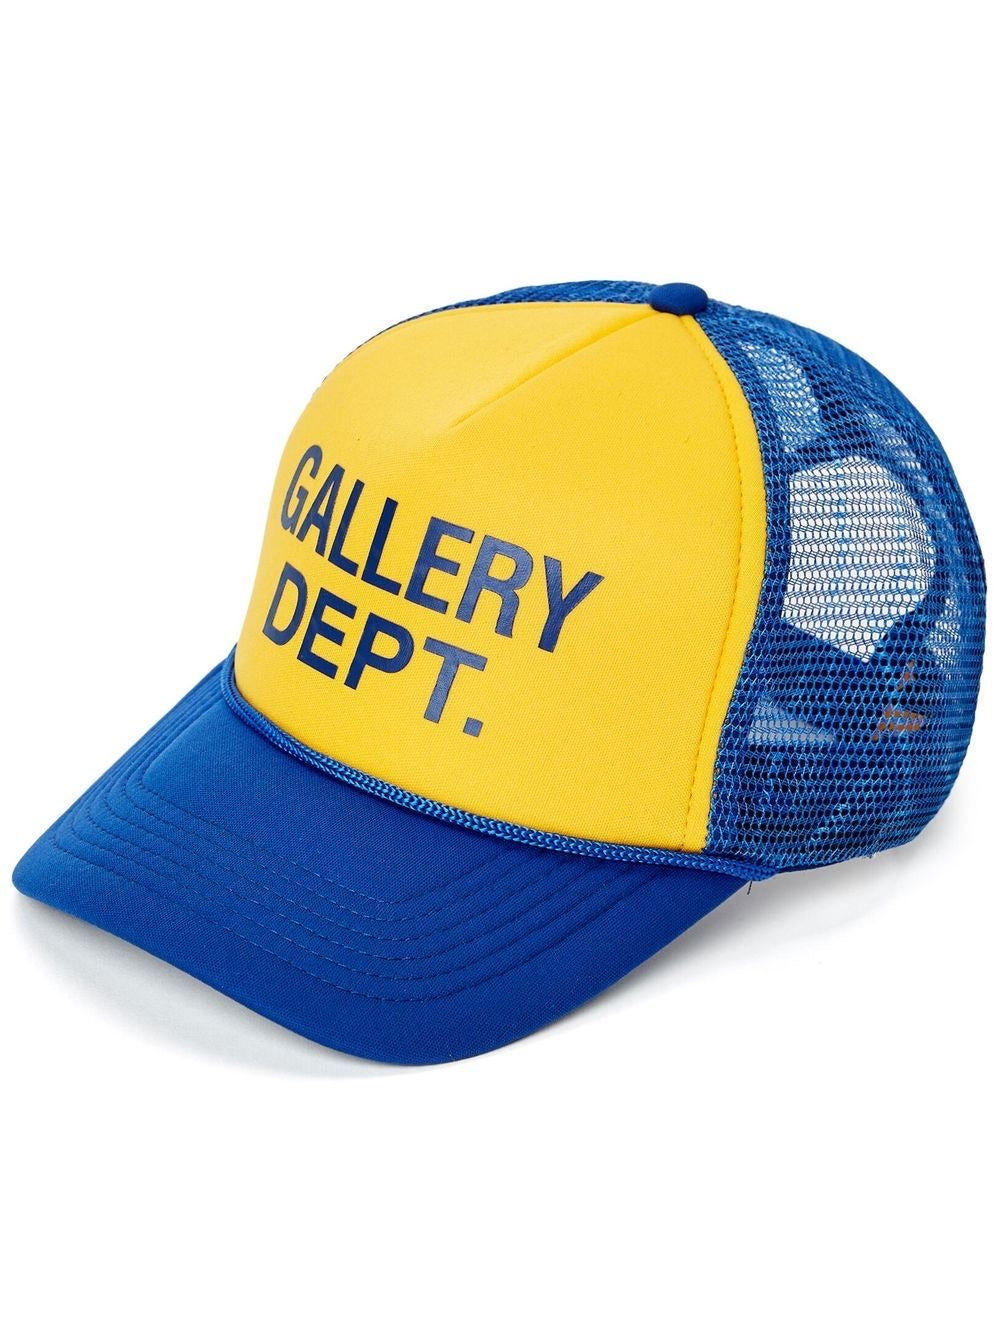 GALLERY DEPT LOGO TRUCKER HAT BLUE YELLOW